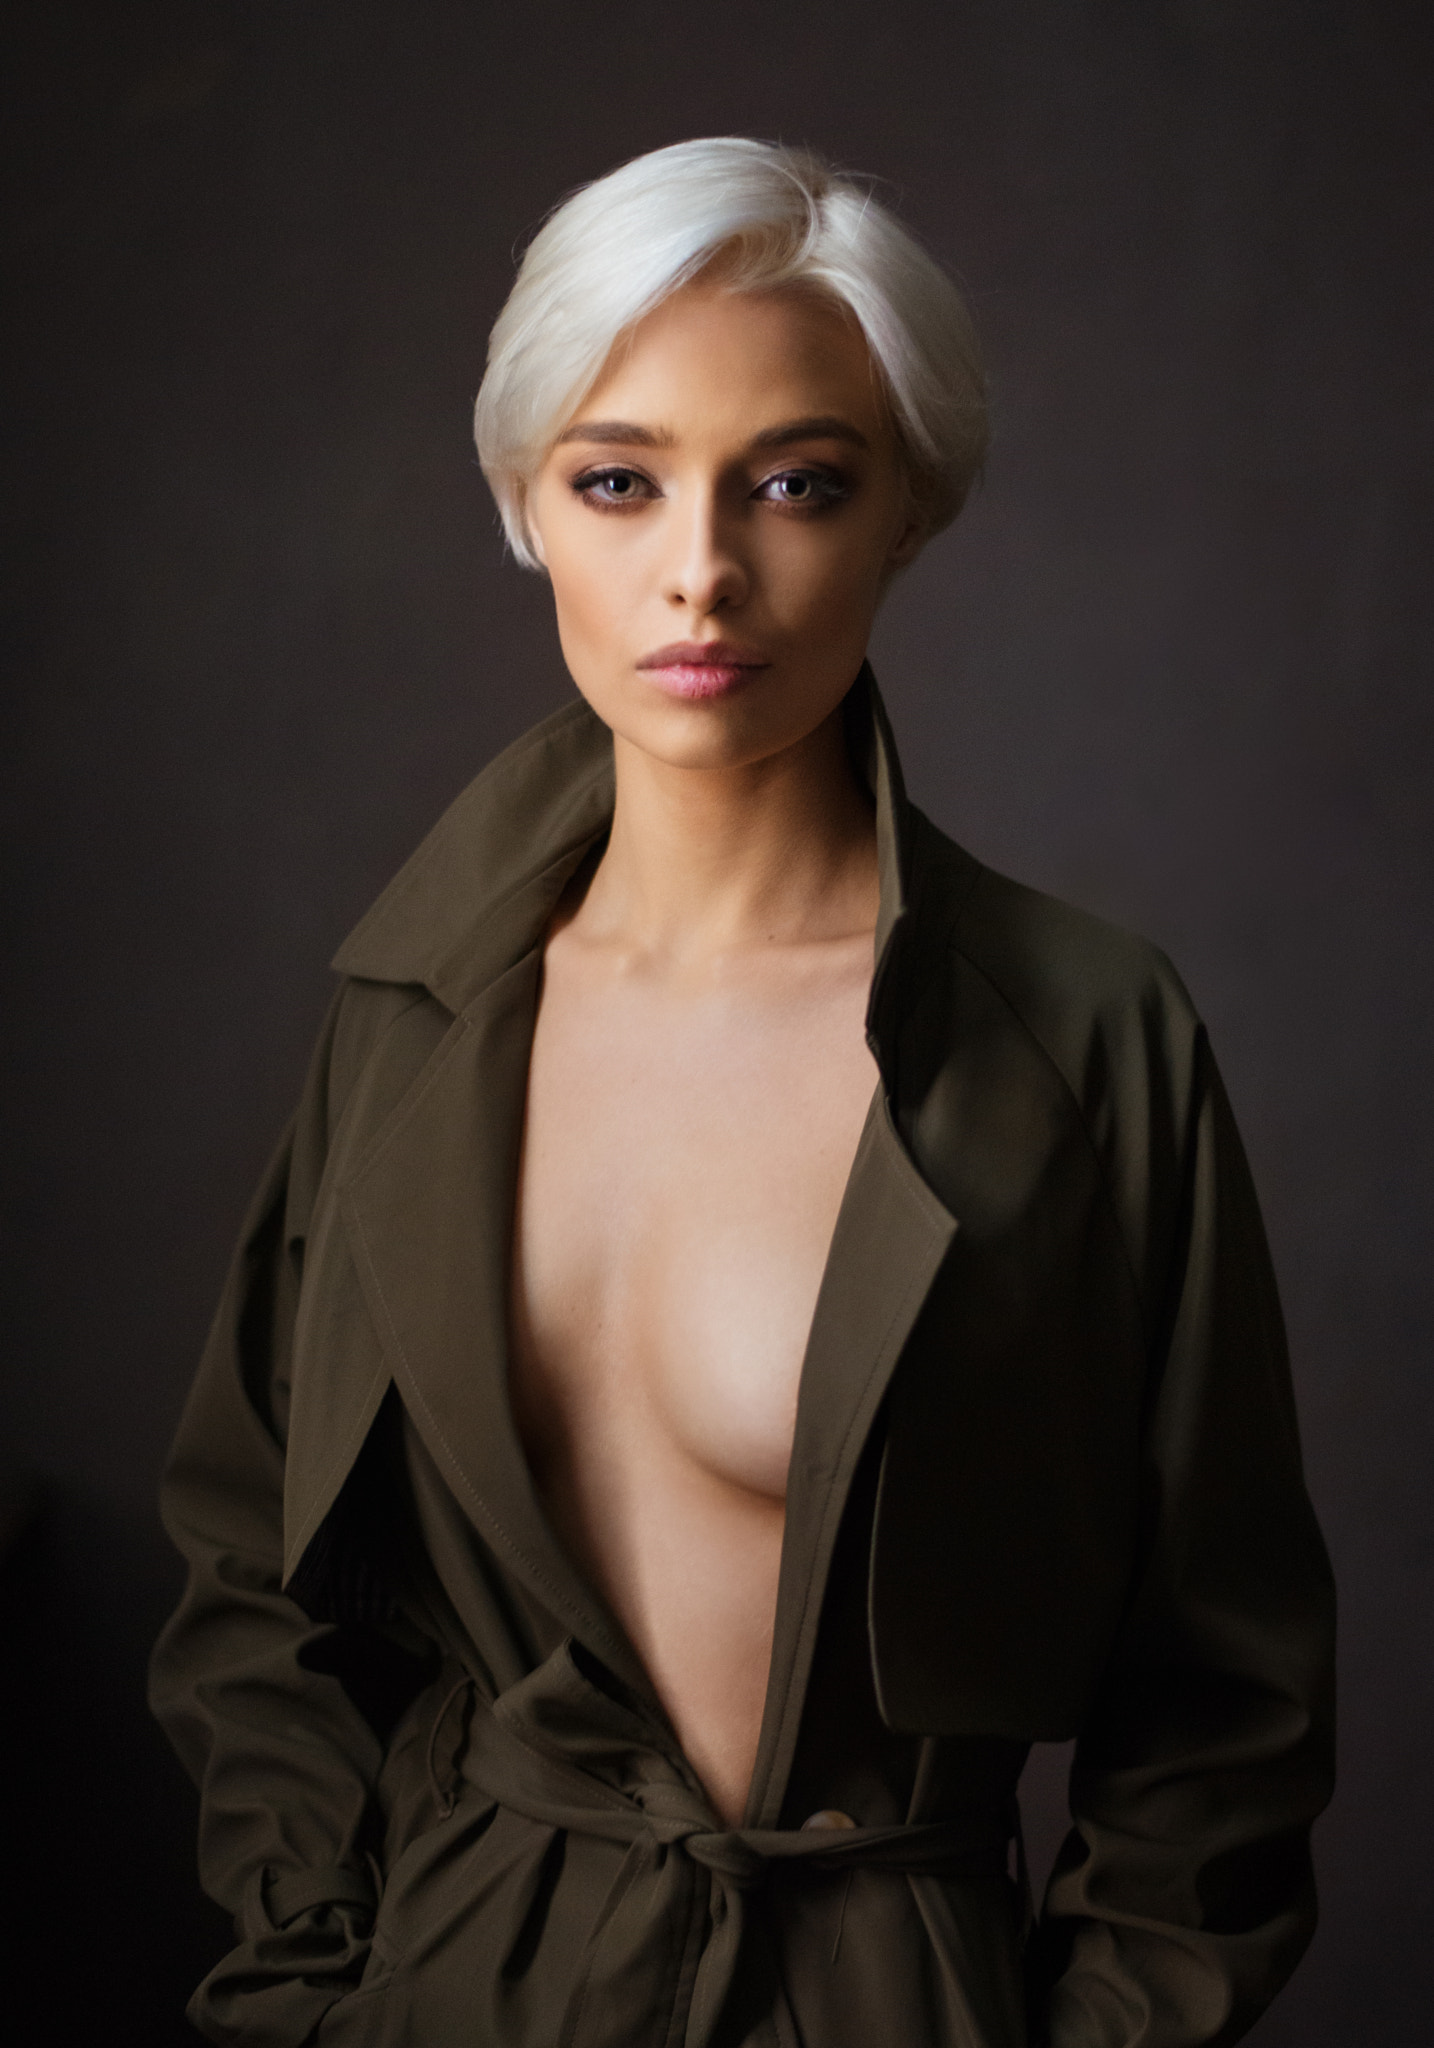 People 1434x2048 Maxim Maximov women Anastasia Khamraeva short hair coats white hair simple background portrait display